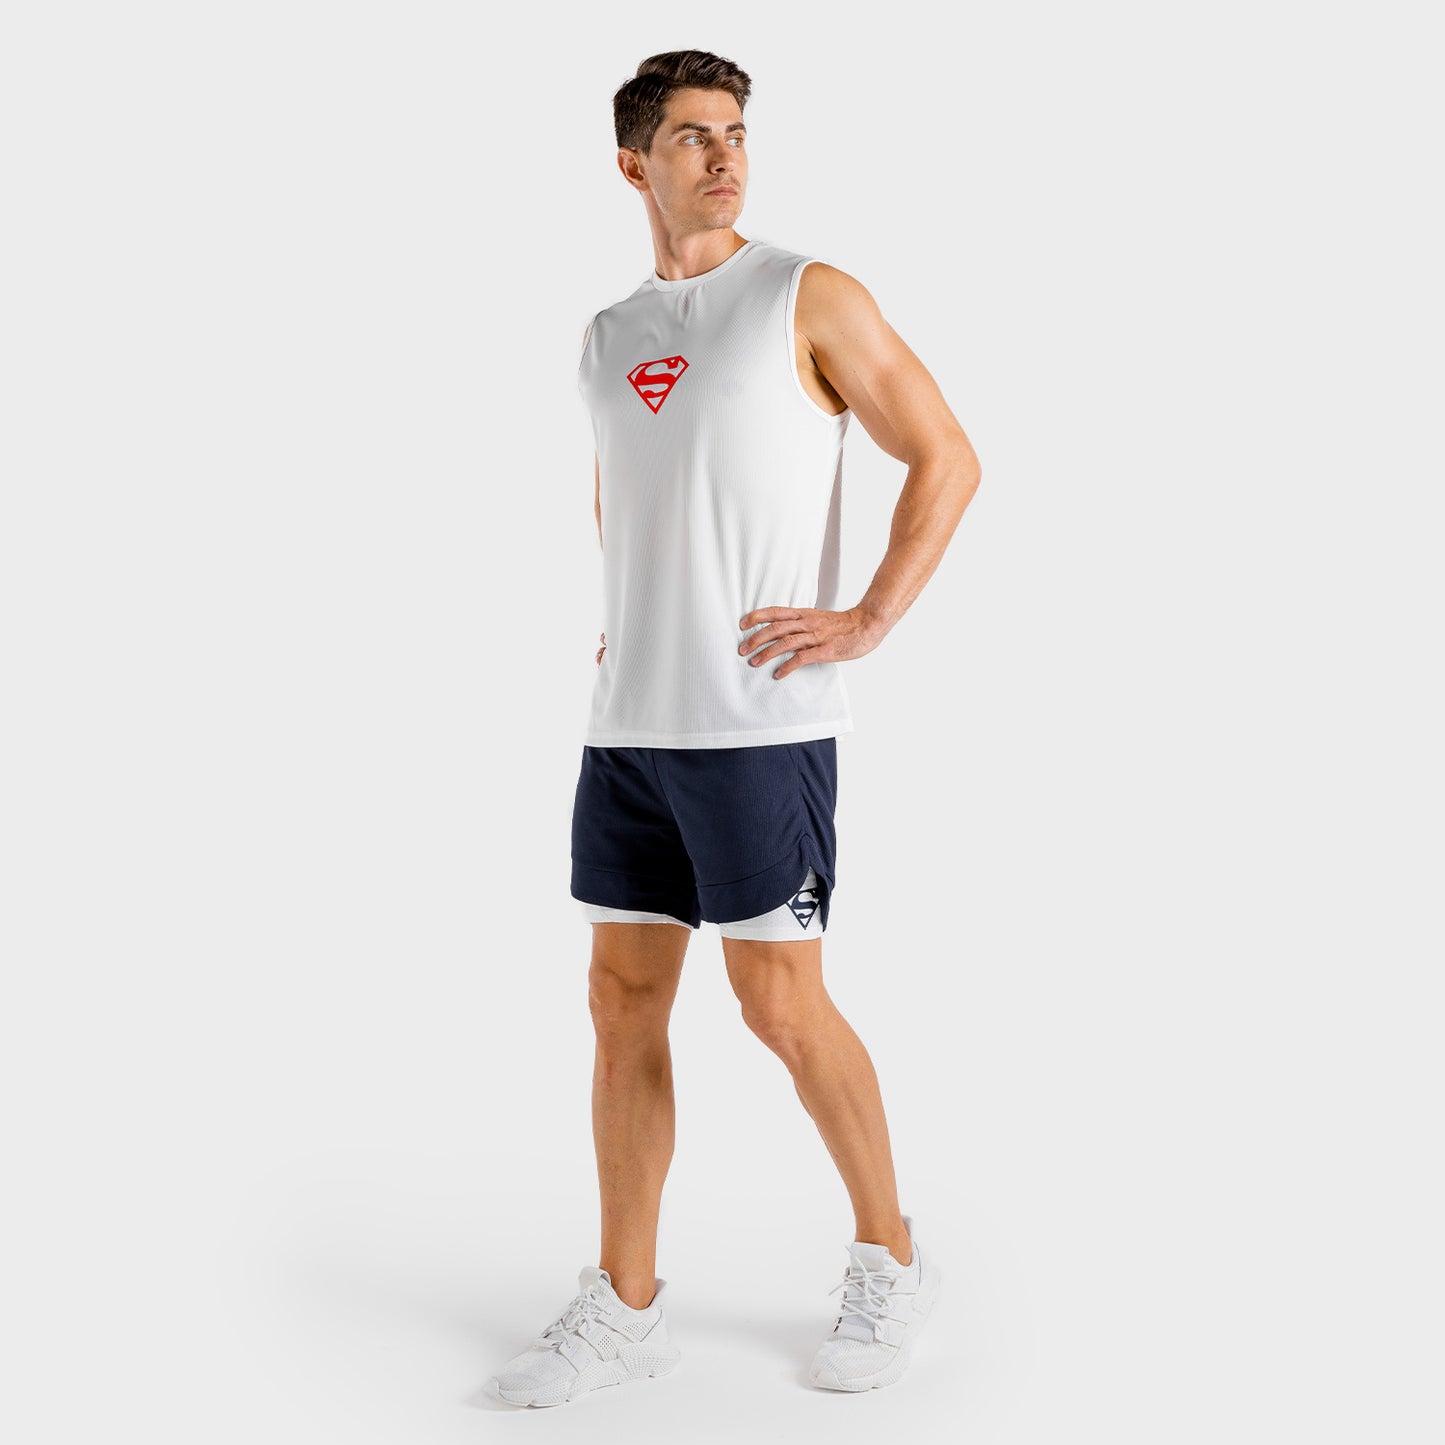 squatwolf-workout-tank-tops-for-men-superman-gym-tank-white-gym-wear